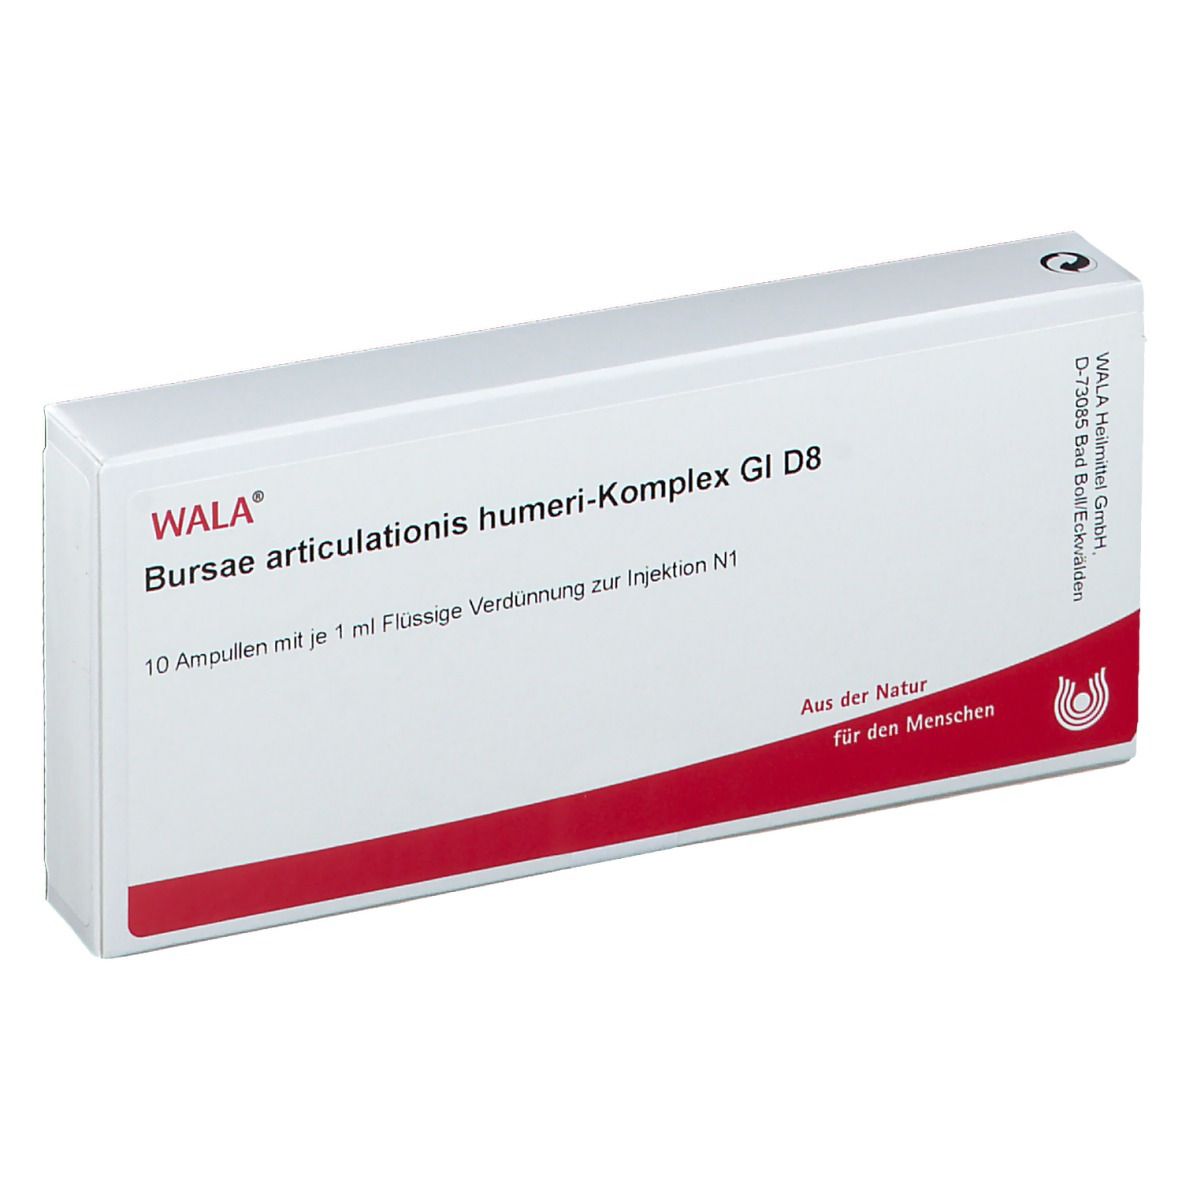 WALA® Bursae articulationis humeri-Komplex Gl D 8